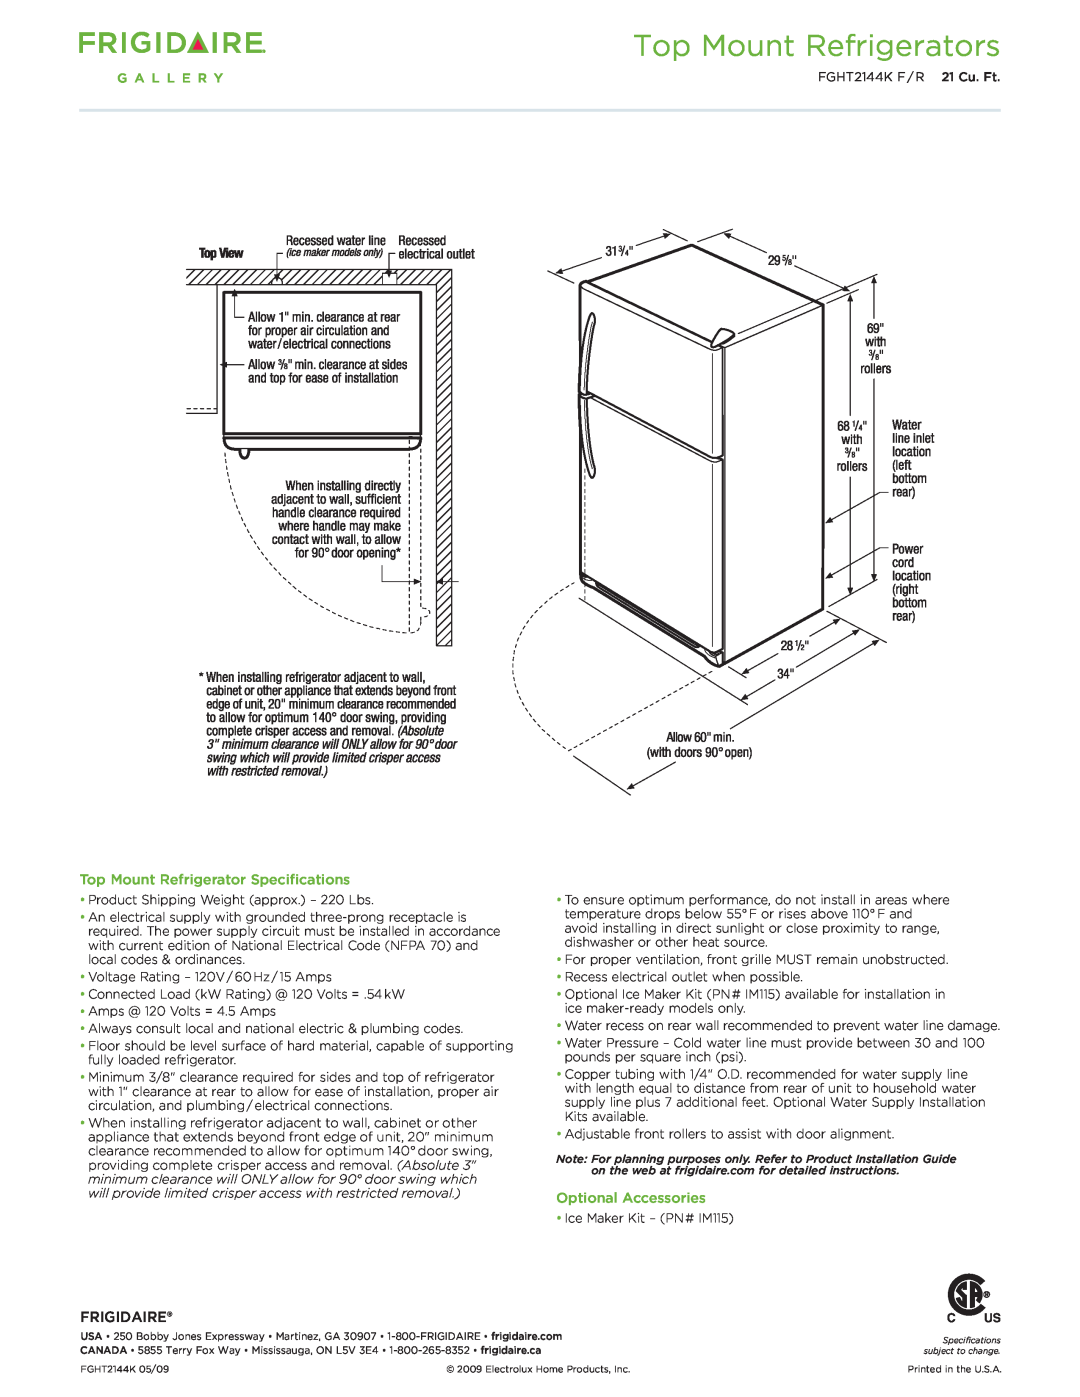 Frigidaire FGHT2144k F/R Top Mount Refrigerator Specifications, Optional Accessories, Frigidaire, Top Mount Refrigerators 